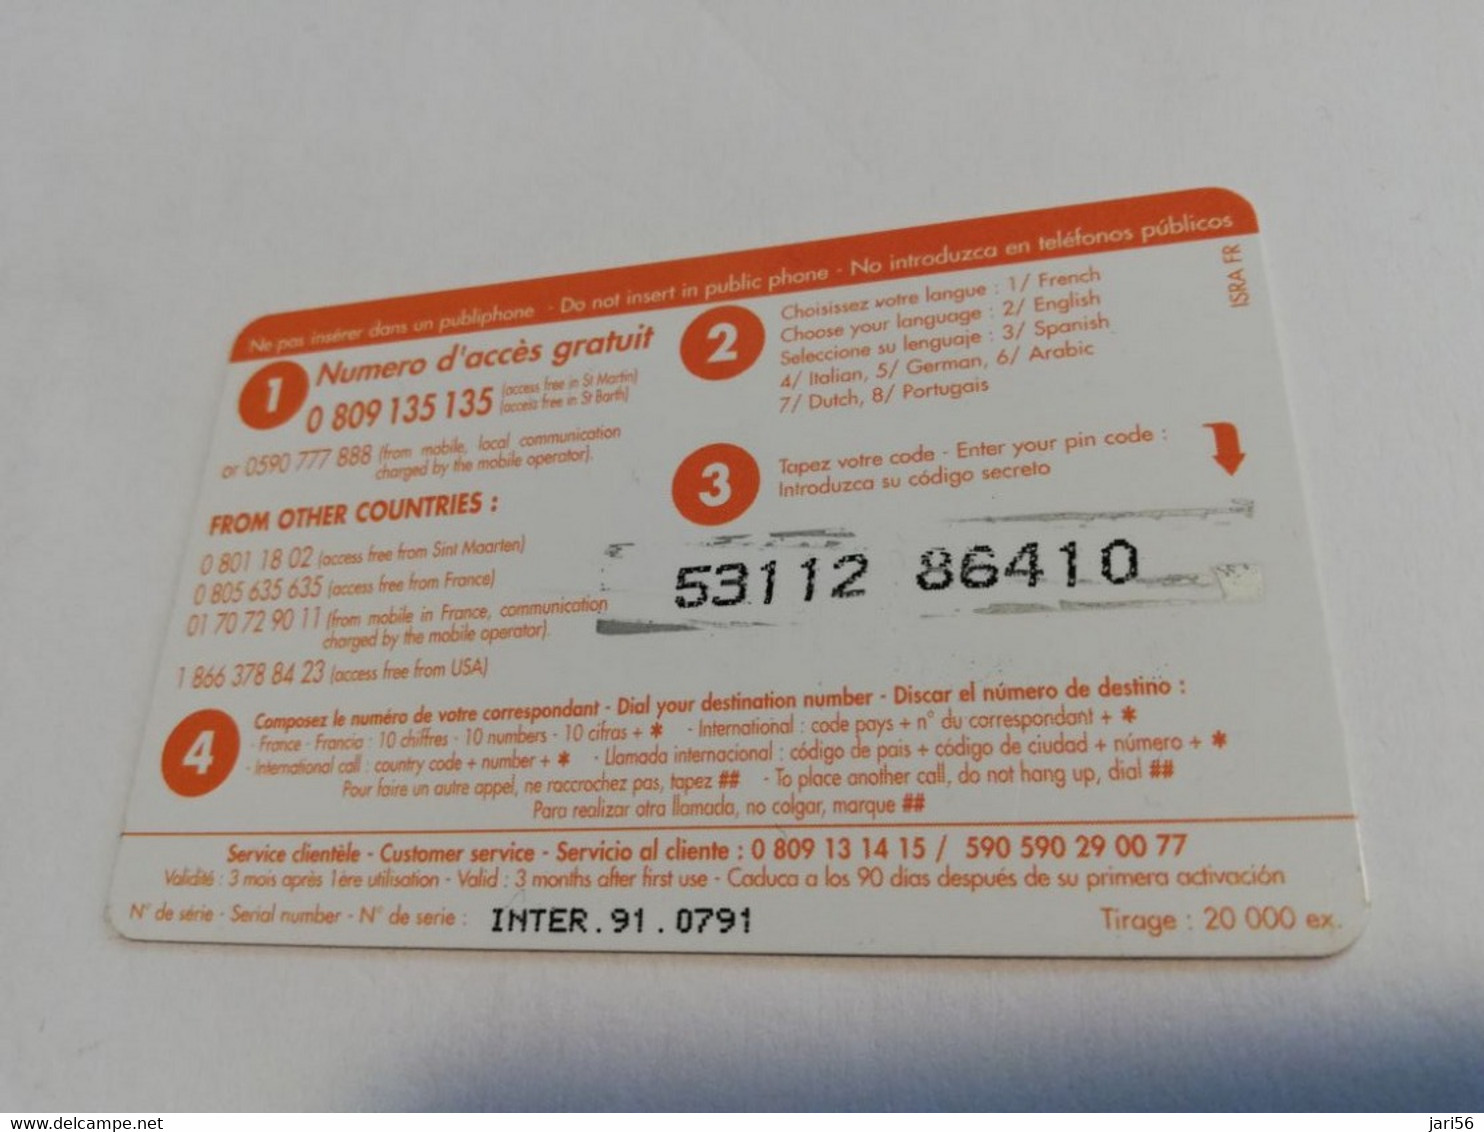 ST MARTIN / INTERCARD  3 EURO  OCTROI DE COLE BAY           NO 091   Fine Used Card    ** 6577 ** - Antillen (Französische)